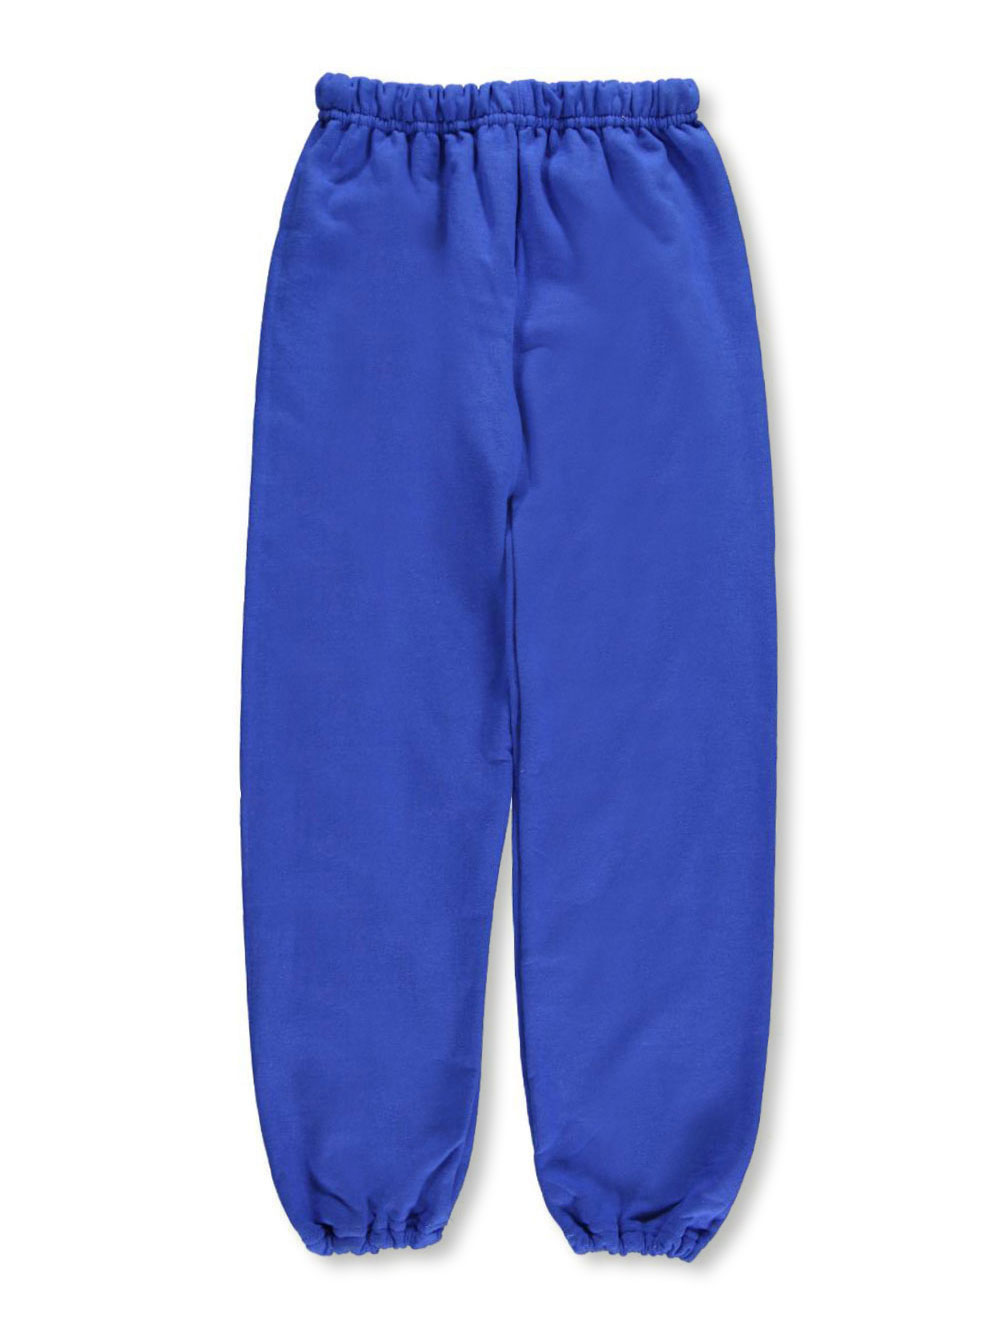 Gildan Girls Gildan Unisex Basic Joggers (Youth Sizes S - XL) - royal blue, l/14-16